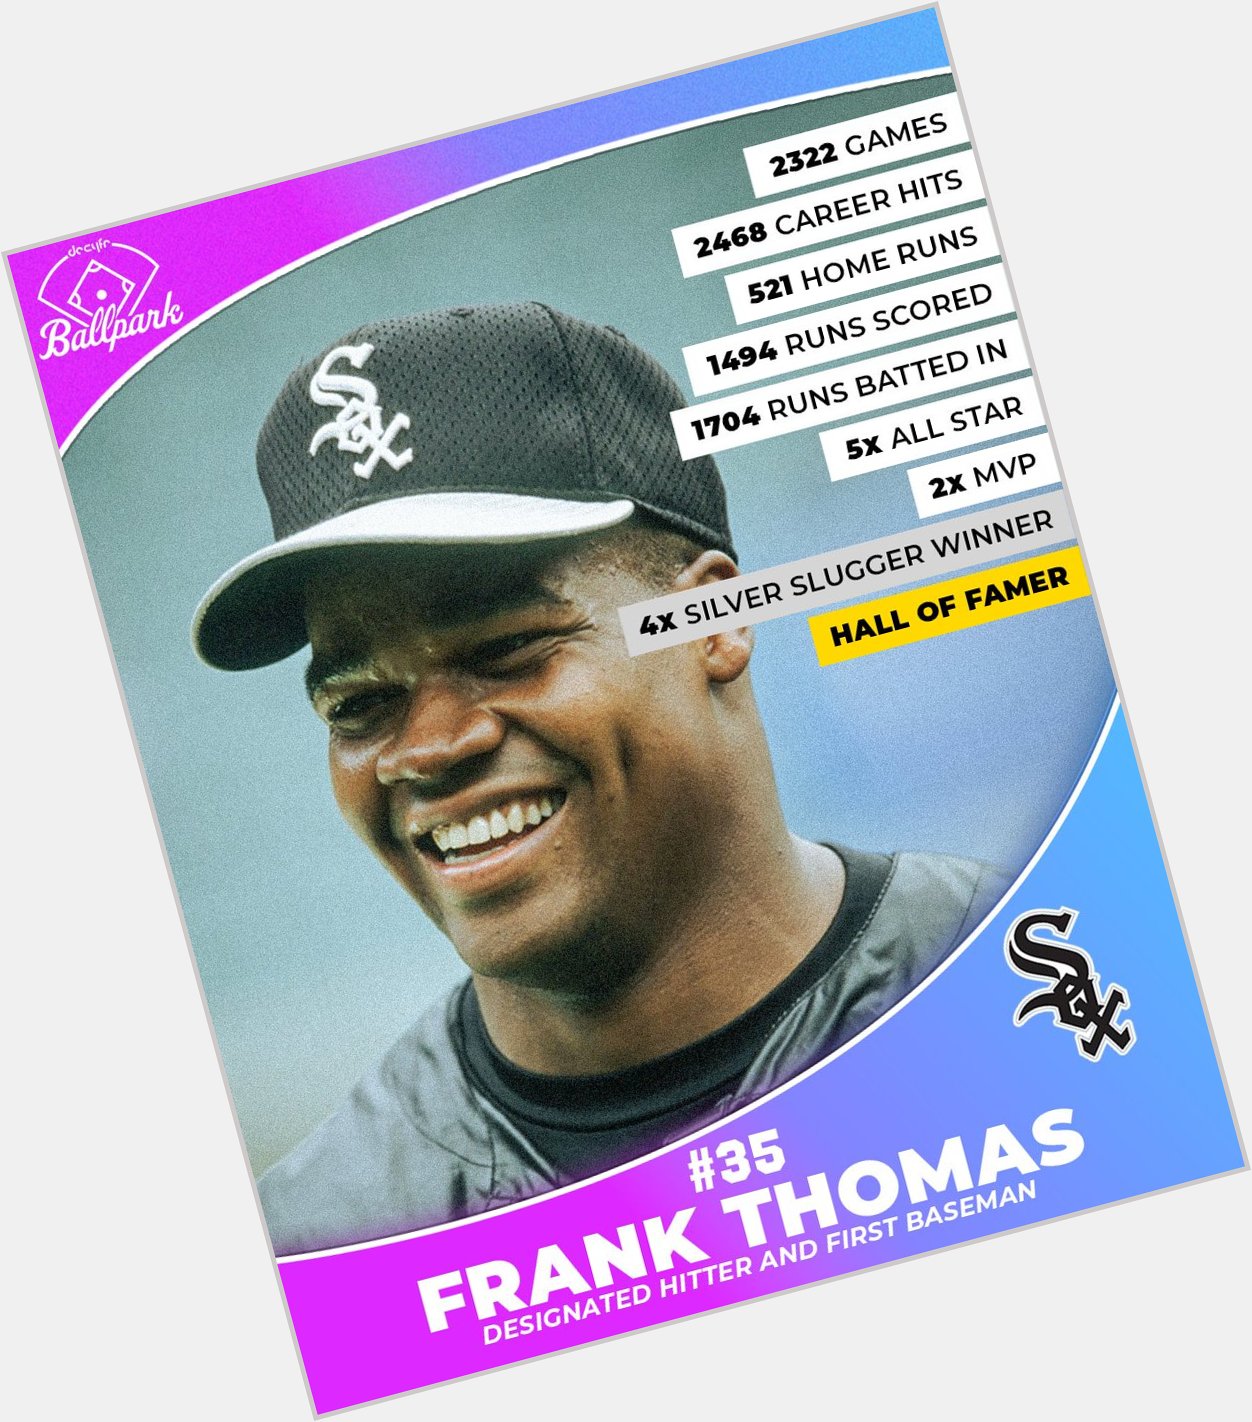 Happy Birthday to the Big Hurt and icon, Frank Thomas!    